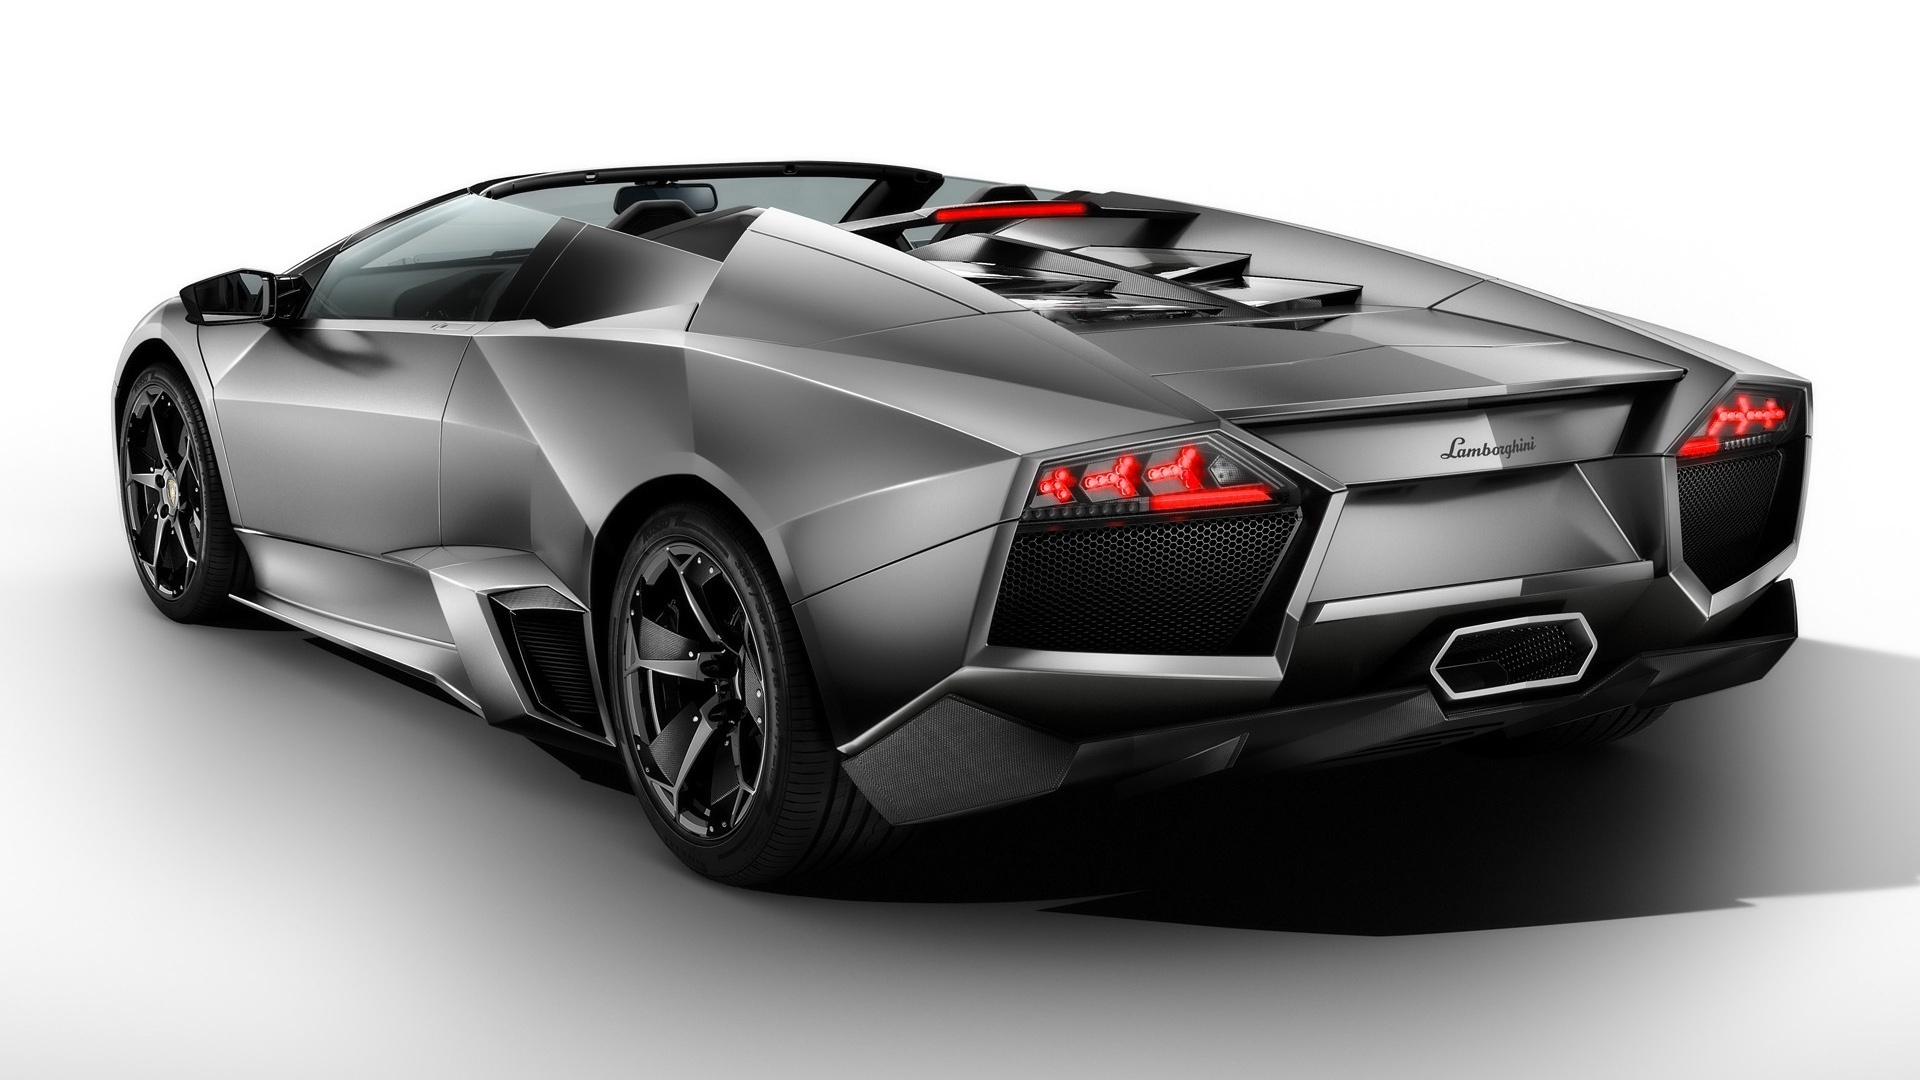 Lamborghini Reventon Roadster Rear 2010 for 1920 x 1080 HDTV 1080p resolution